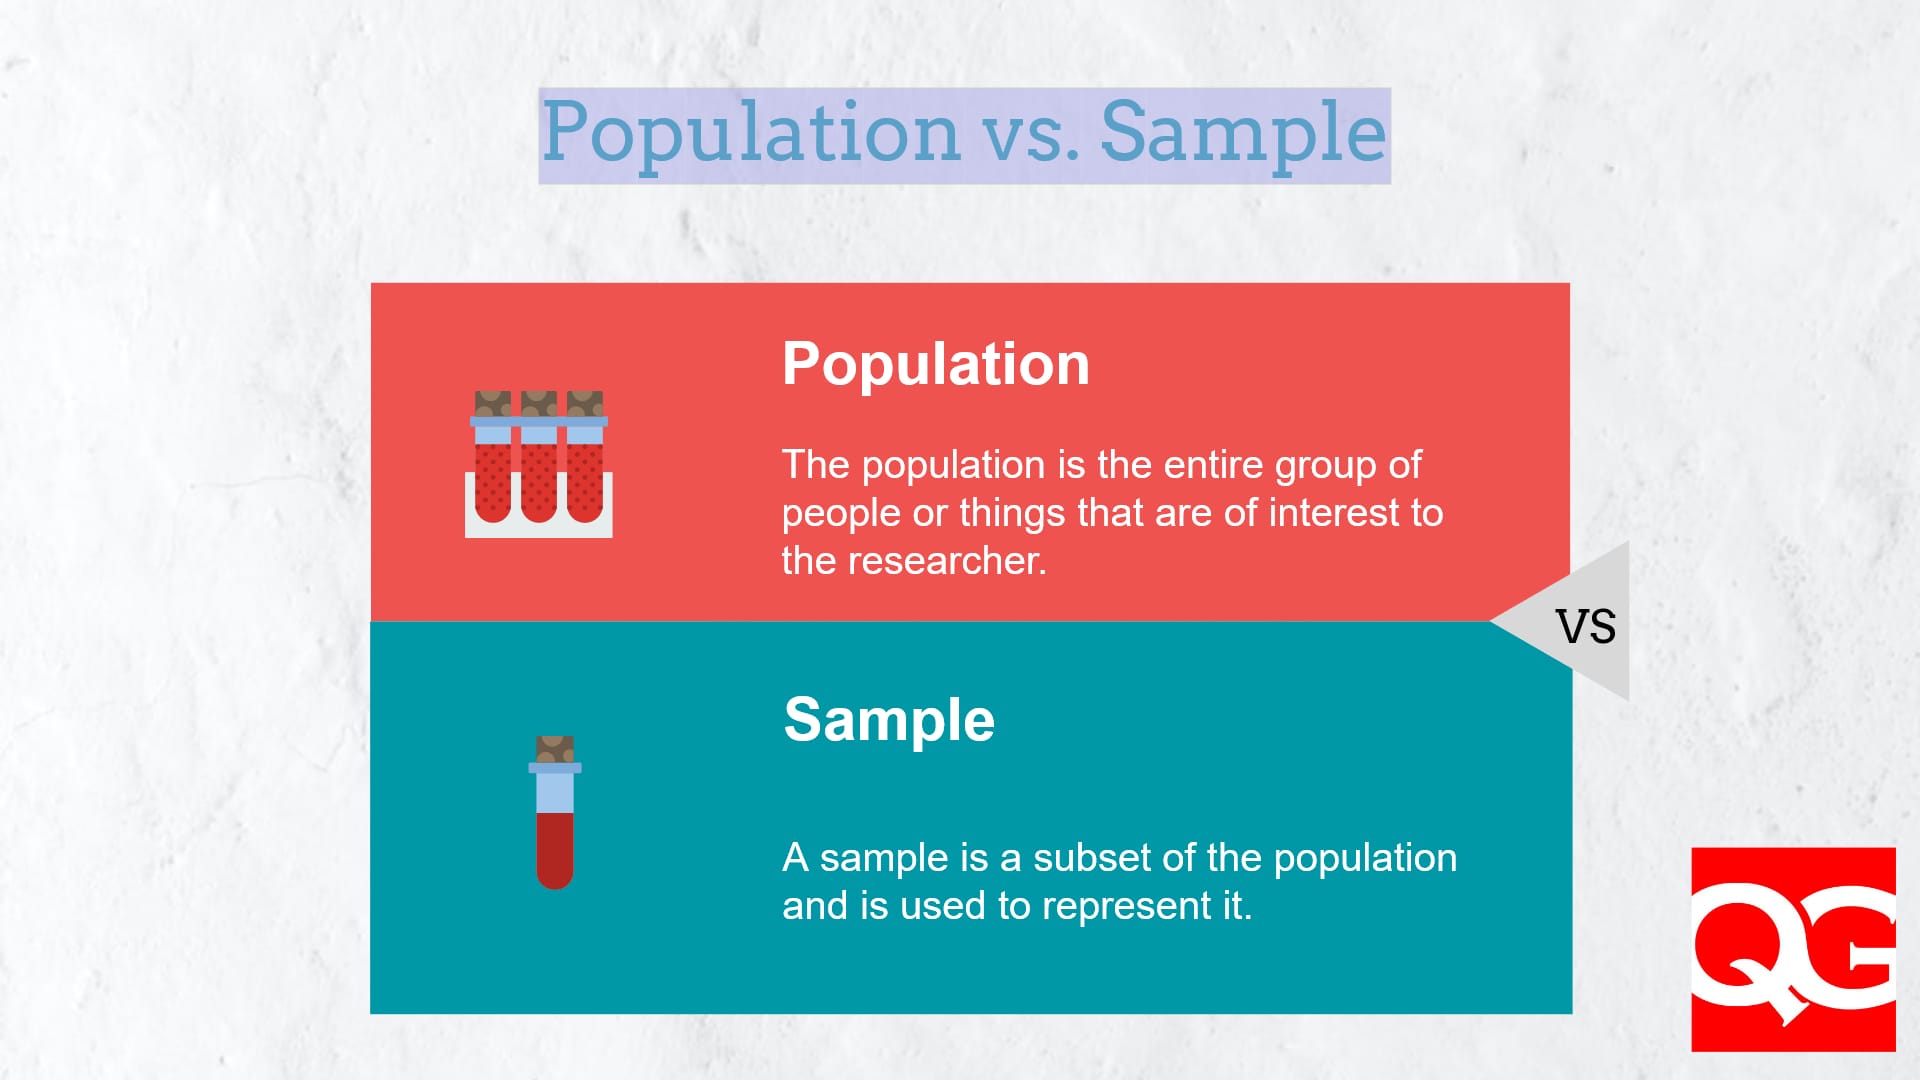 hypothesis testing sample vs population